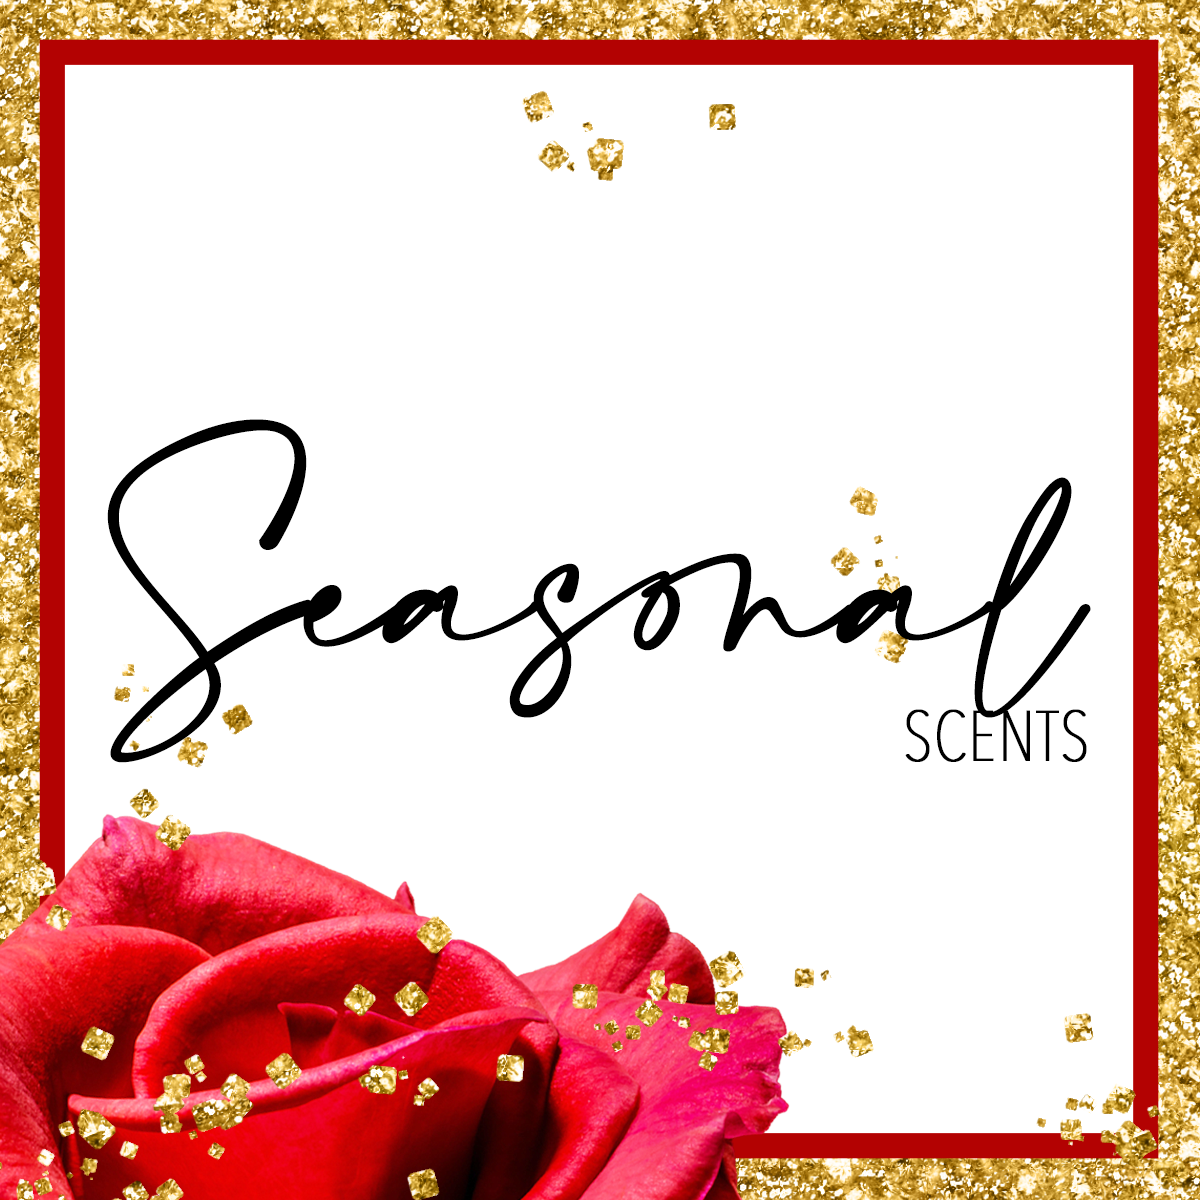 Seasonal Scents